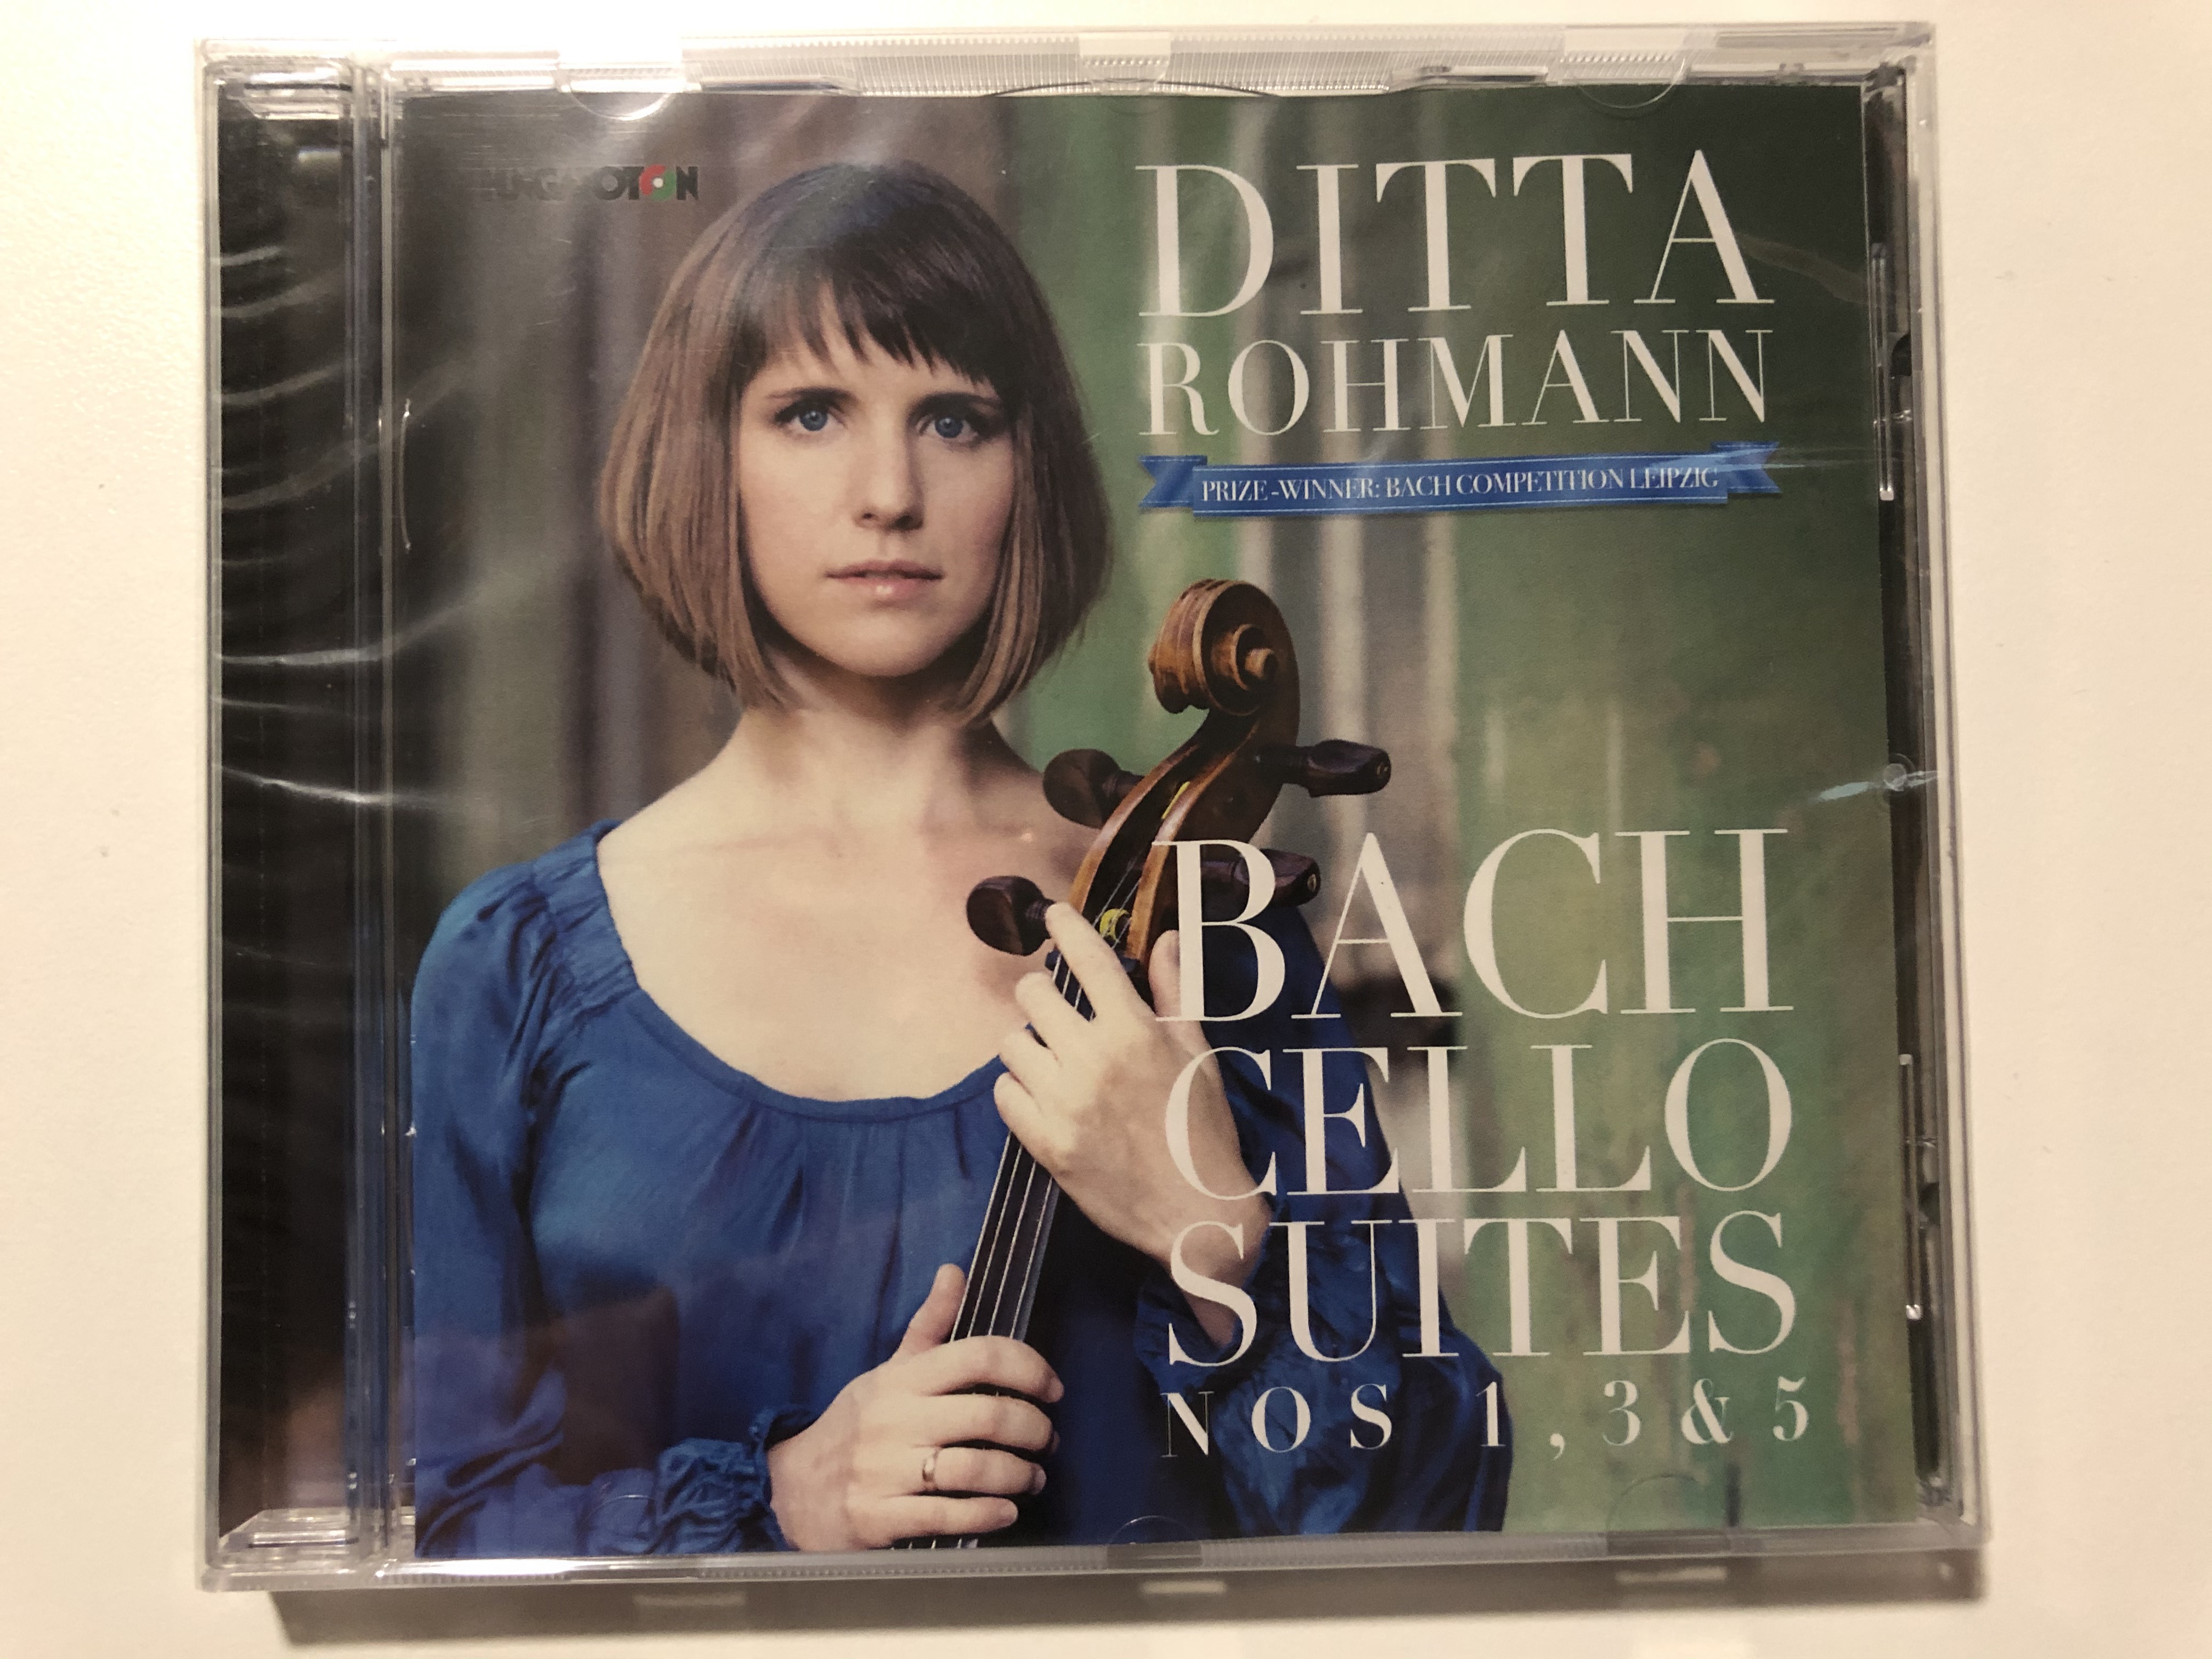 ditta-rohmann-bach-cello-suites-nos-1-3-5-prize-winner-bach-compettion-leipzic-hungaroton-audio-cd-2013-hgr-32731-1-.jpg